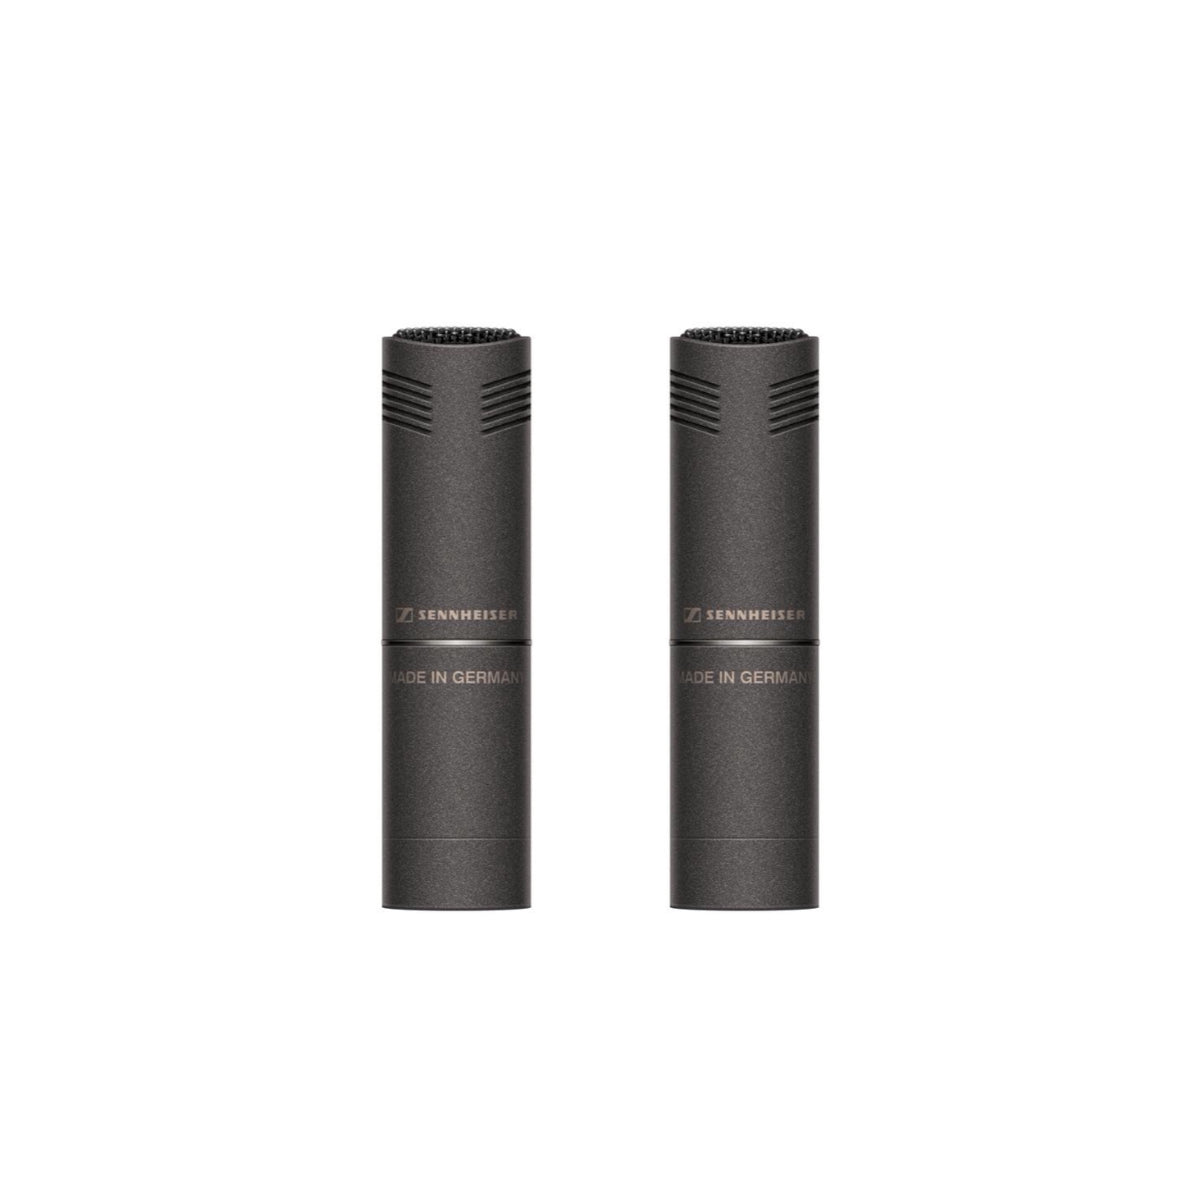 Sennheiser MKH 8040 Stereoset Redesign 2x Condenser Cardioid Microphone, 2 XLR Module, Black